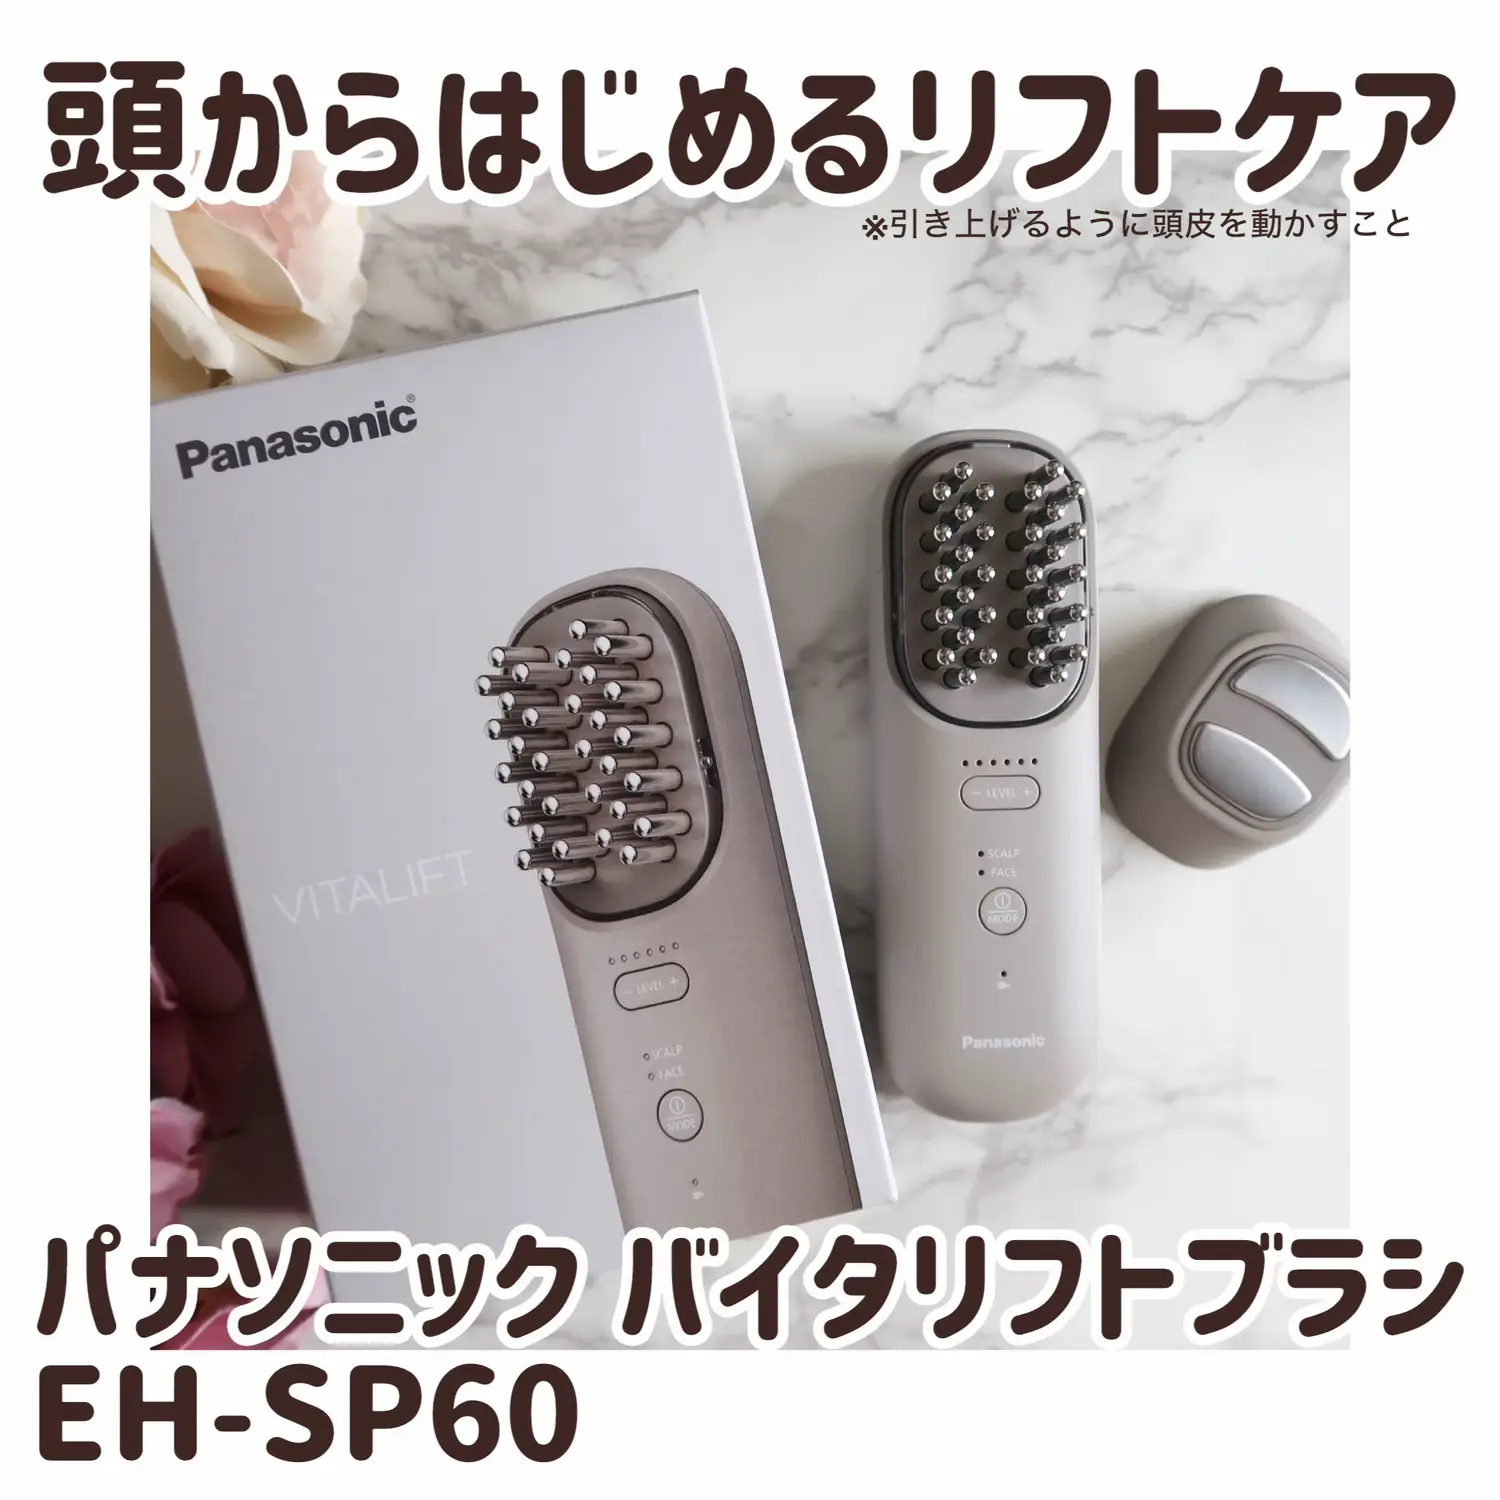 ☆Panasonic パナソニック 美顔器 バイタリフト ブラシ EH-SP60-H ...